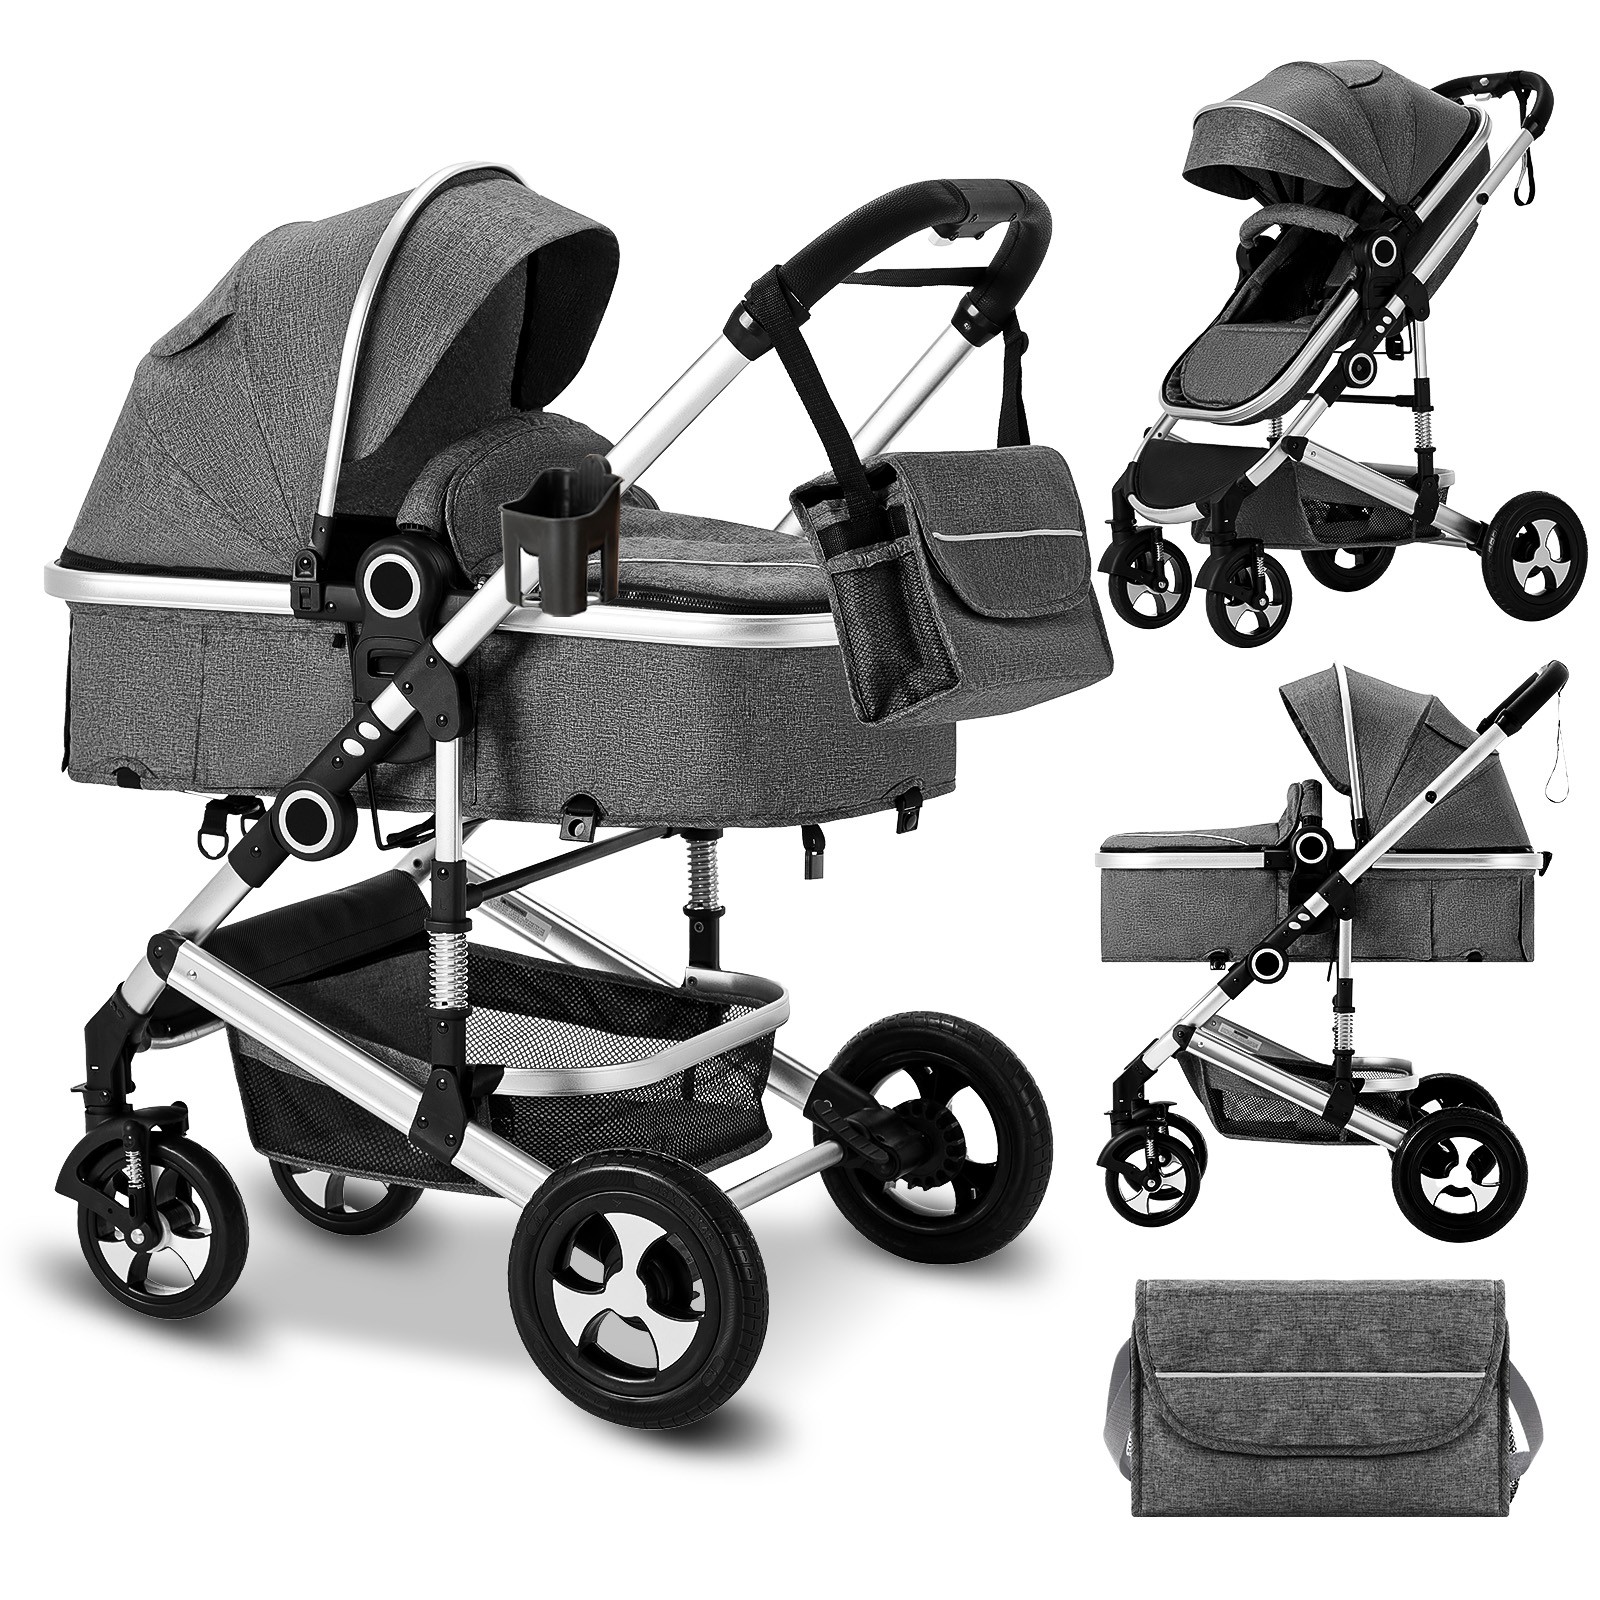 AILEEKISS 2 in 1 Convertible Baby Stroller, Unisex Folding Infant Newborn Bassinet Pram, Dark Grey - image 1 of 9